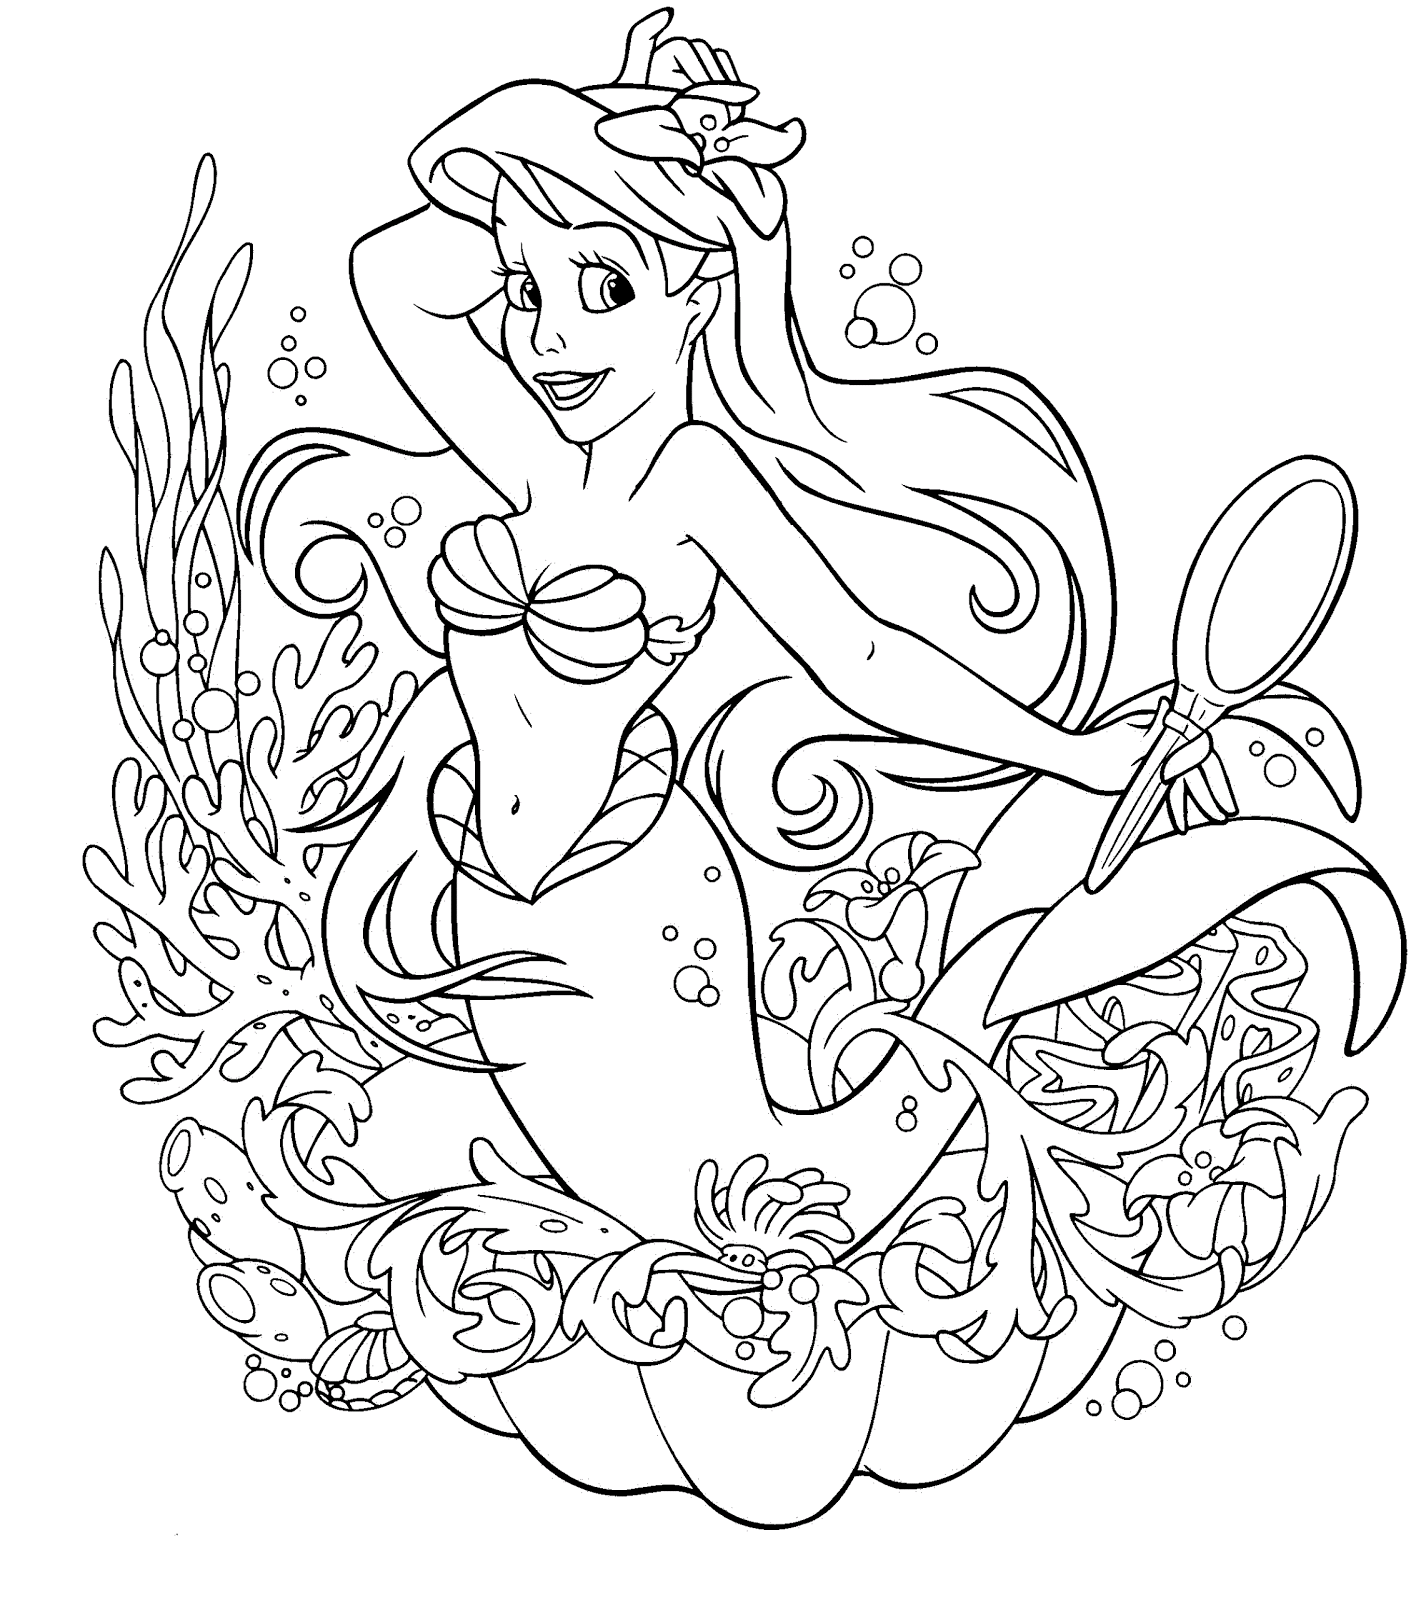 mermaid coloring page the little mermaid coloring pages to download and print coloring page mermaid 